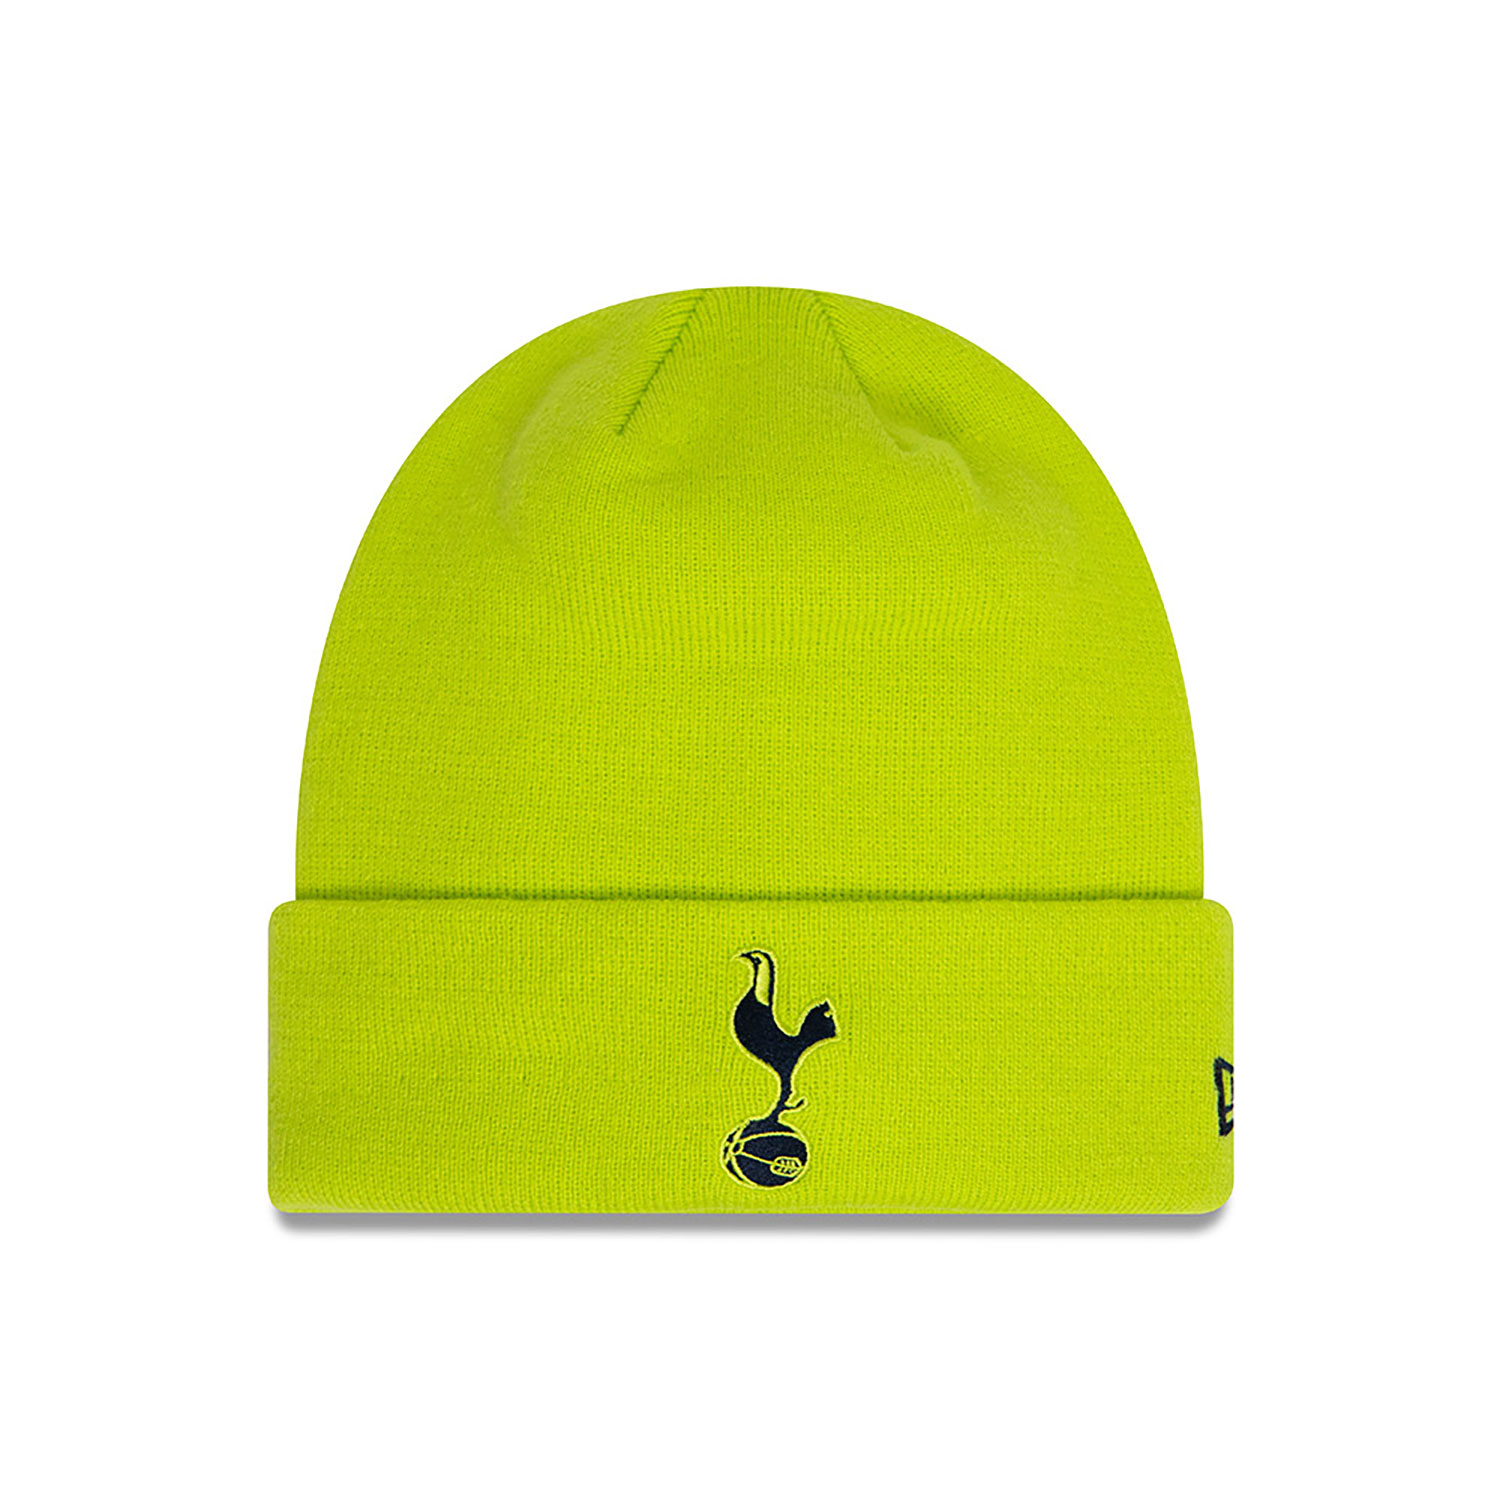 Tottenham Hotspur FC Seasonal Green Cuff Knit Beanie Hat